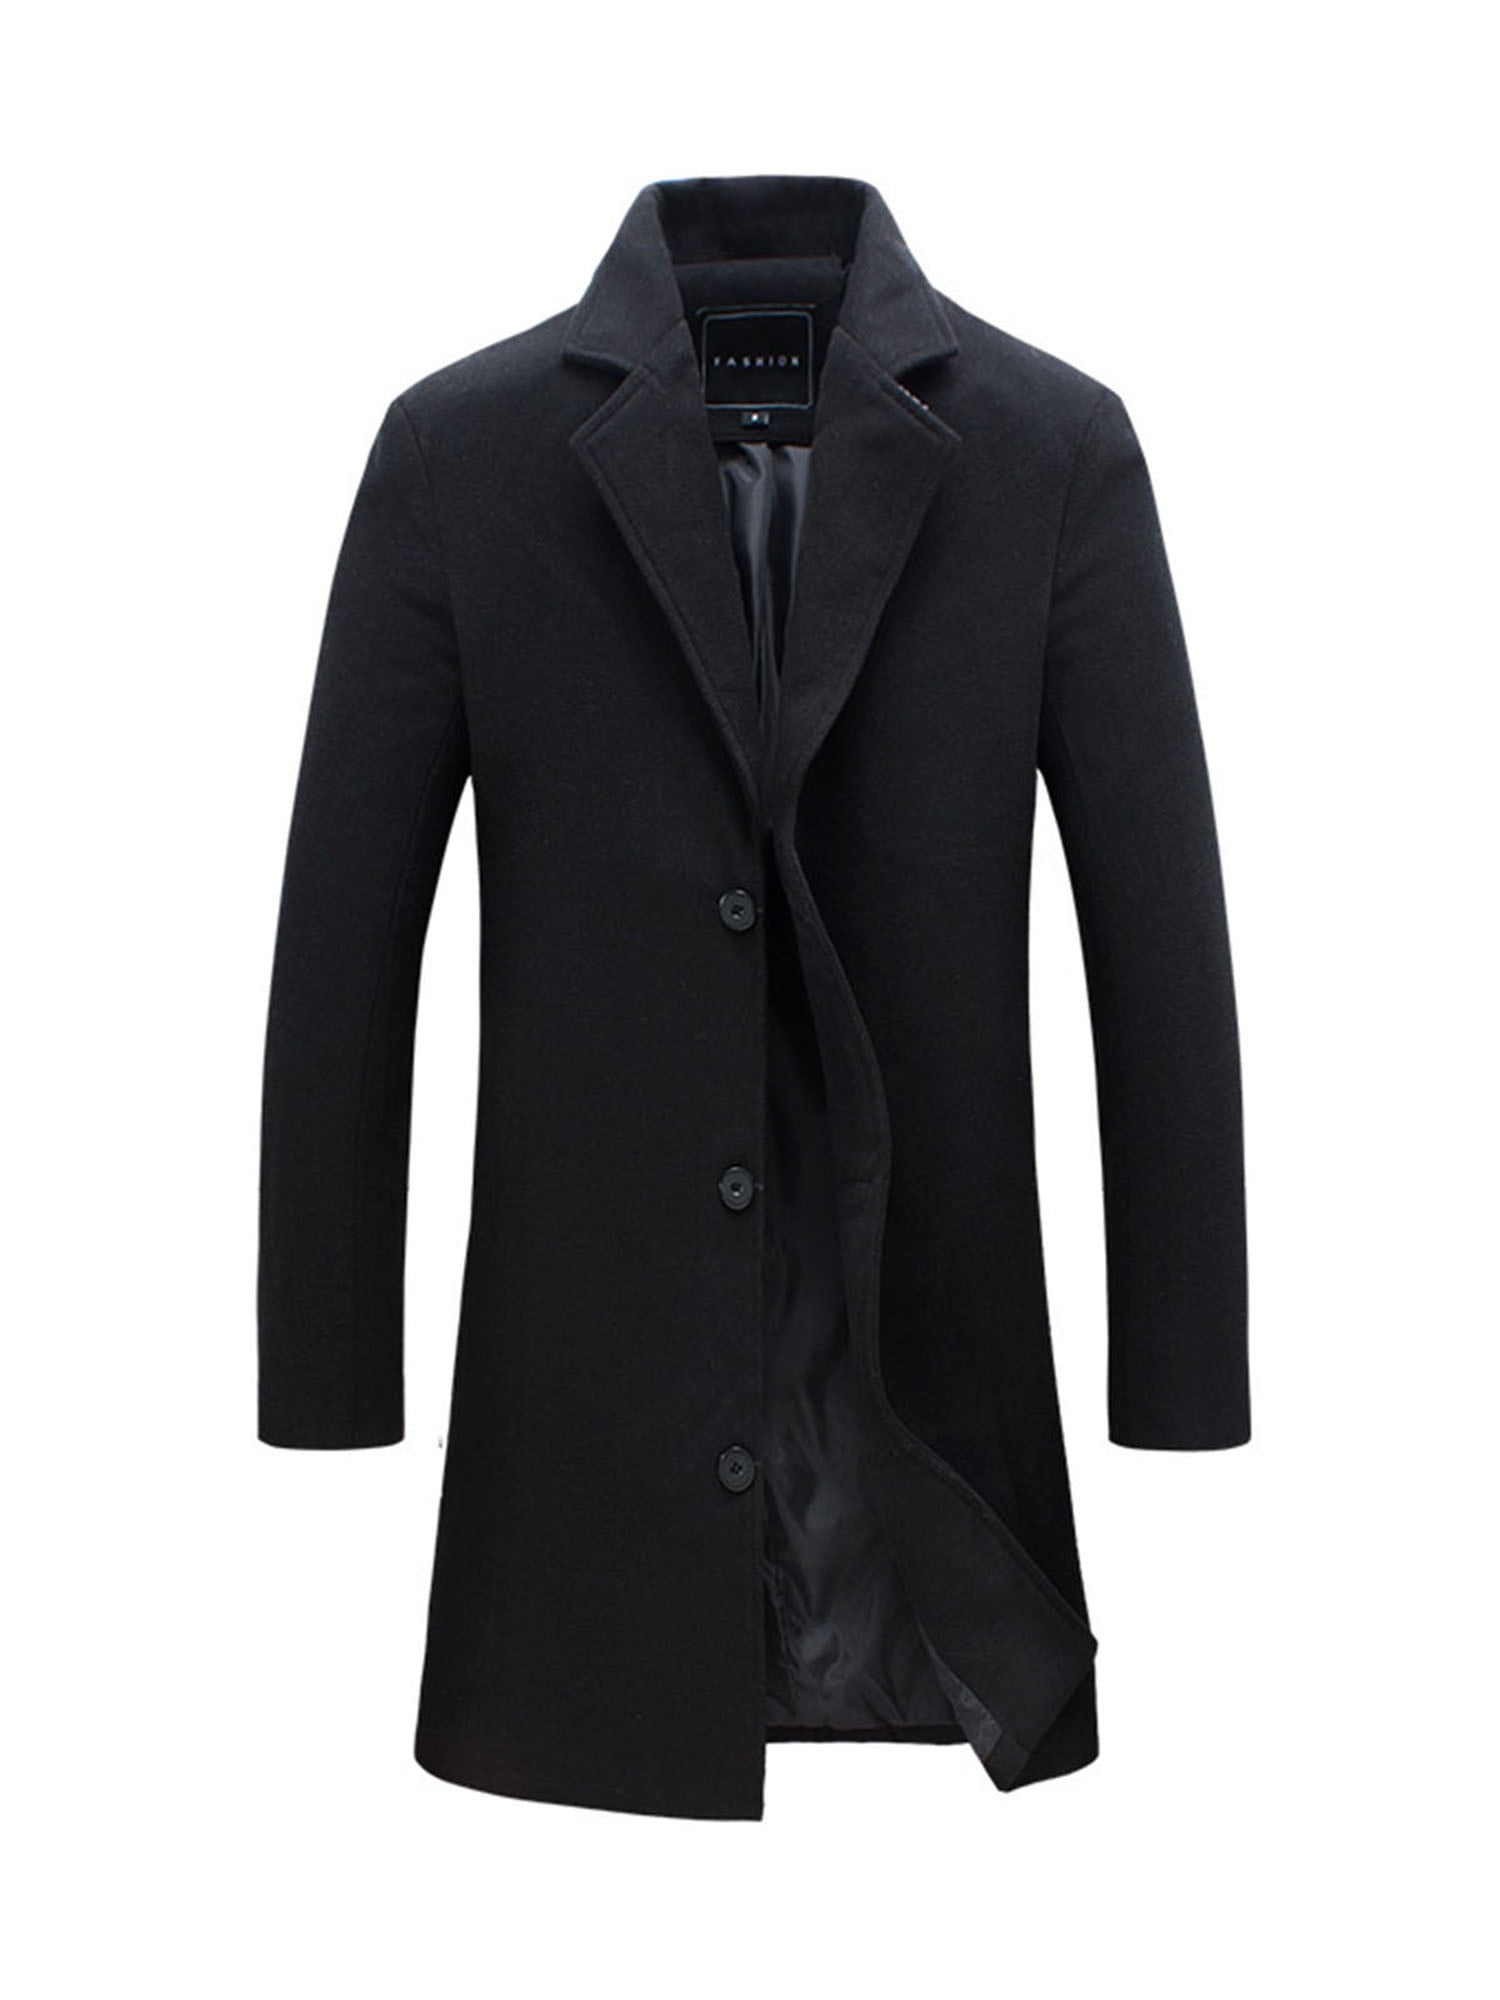 Men's Winter Wool Coat Slim Fit Long Jacket Men's Warm Wool Coat Casual  Winter Business Slim Fit Jacket Winter Coat 